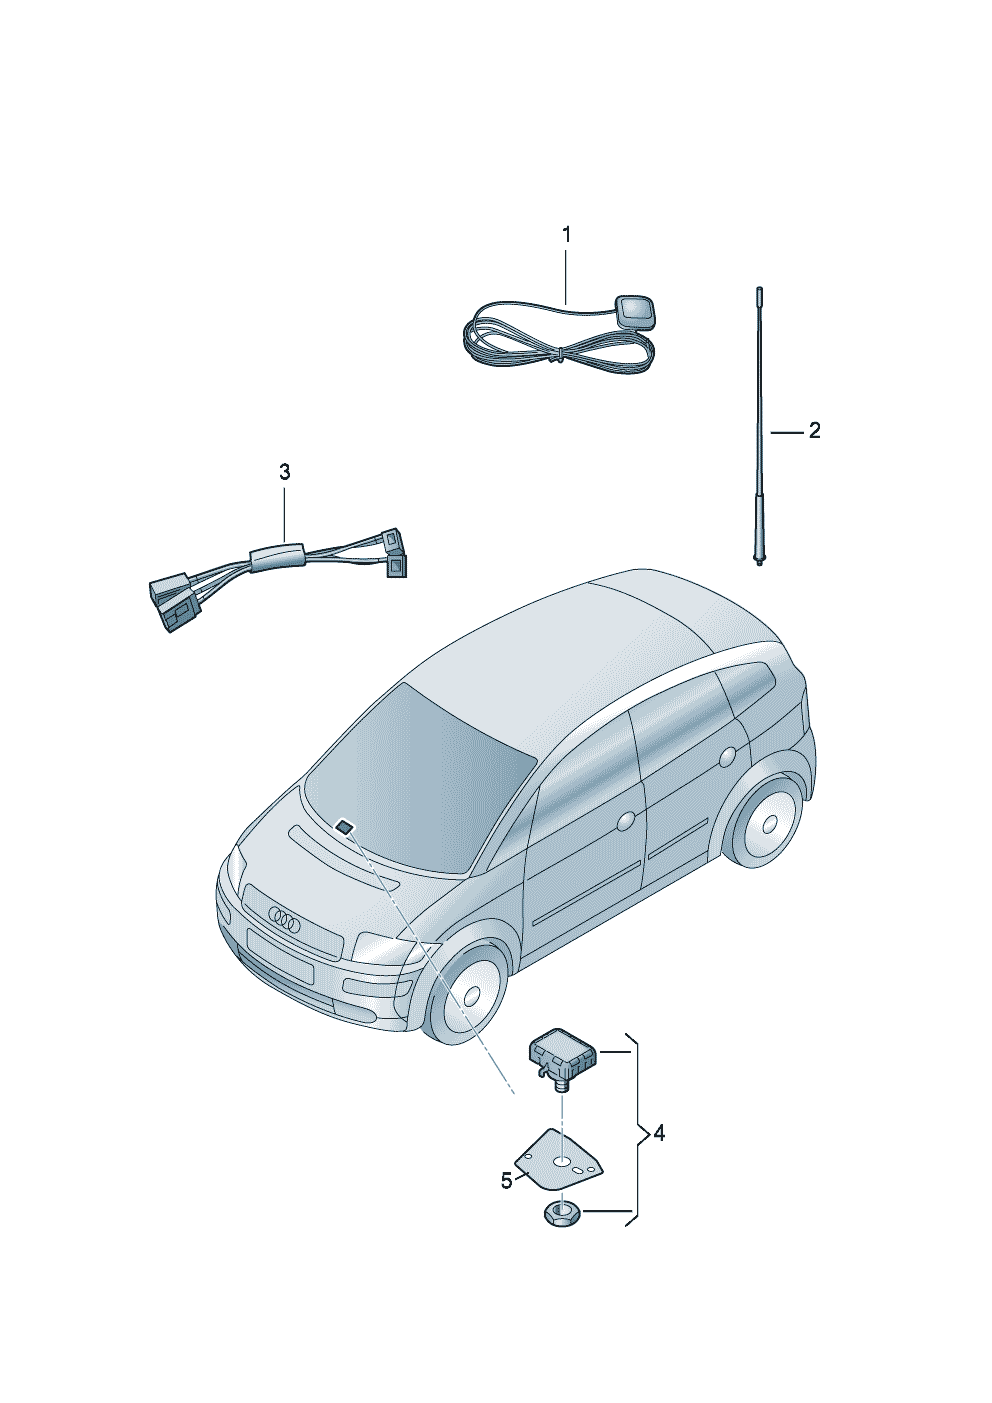 Originele accessoiresantenne<br/>geen FI-functie mogelijk  - Audi A2 - a2